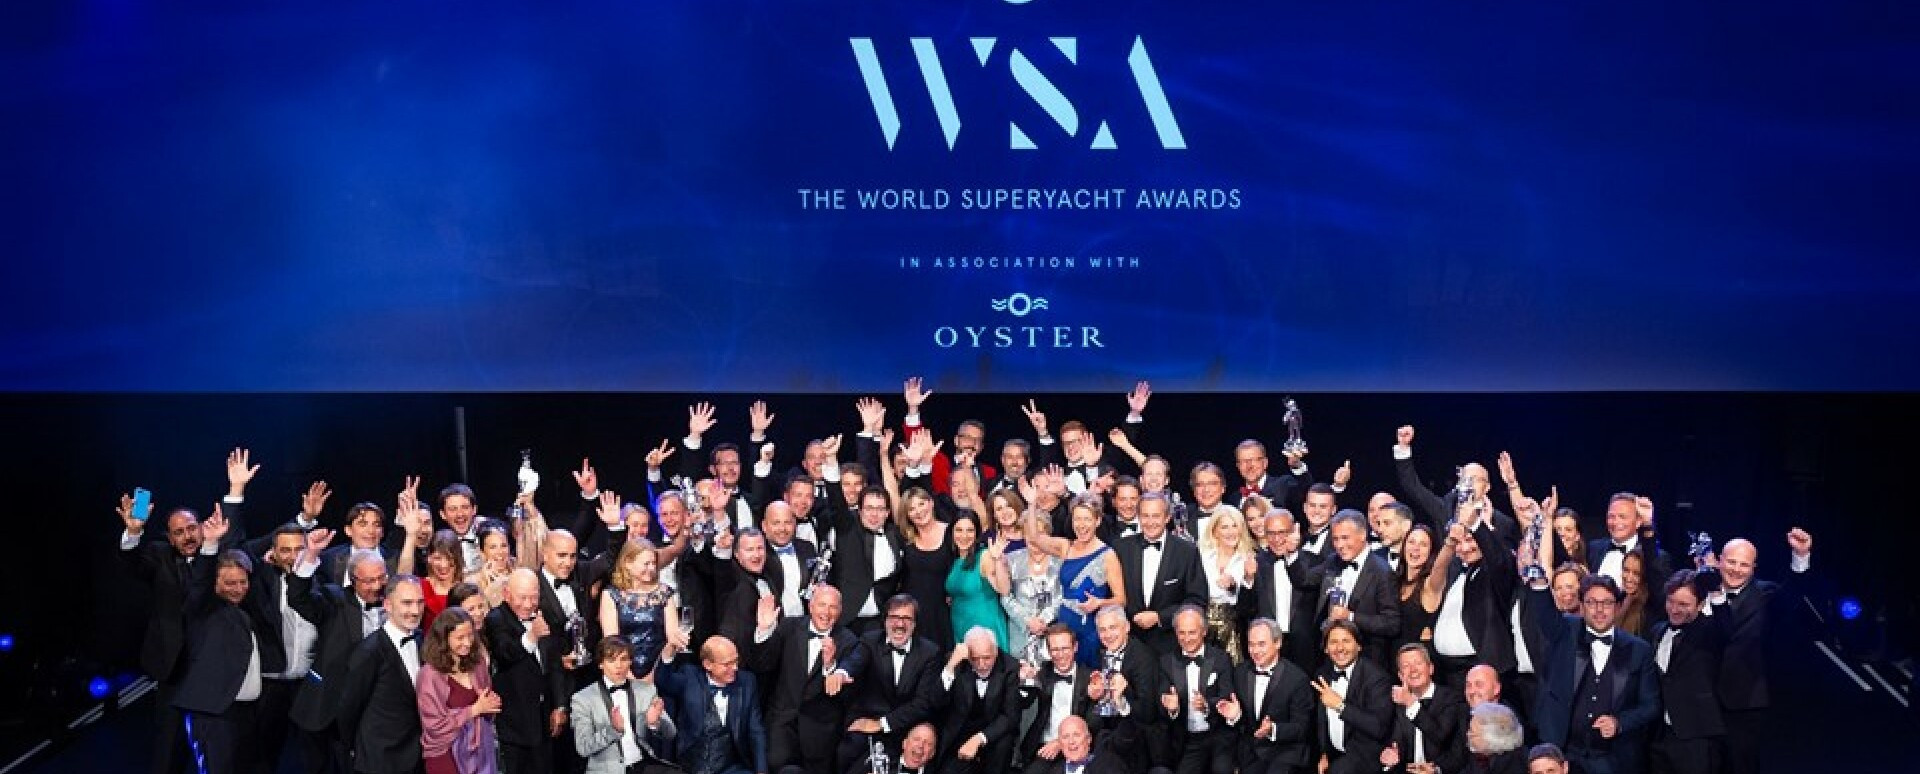                                                                                                     World Superyacht Awards 2019 celebrates superyacht industry’s finest
                                                                                            